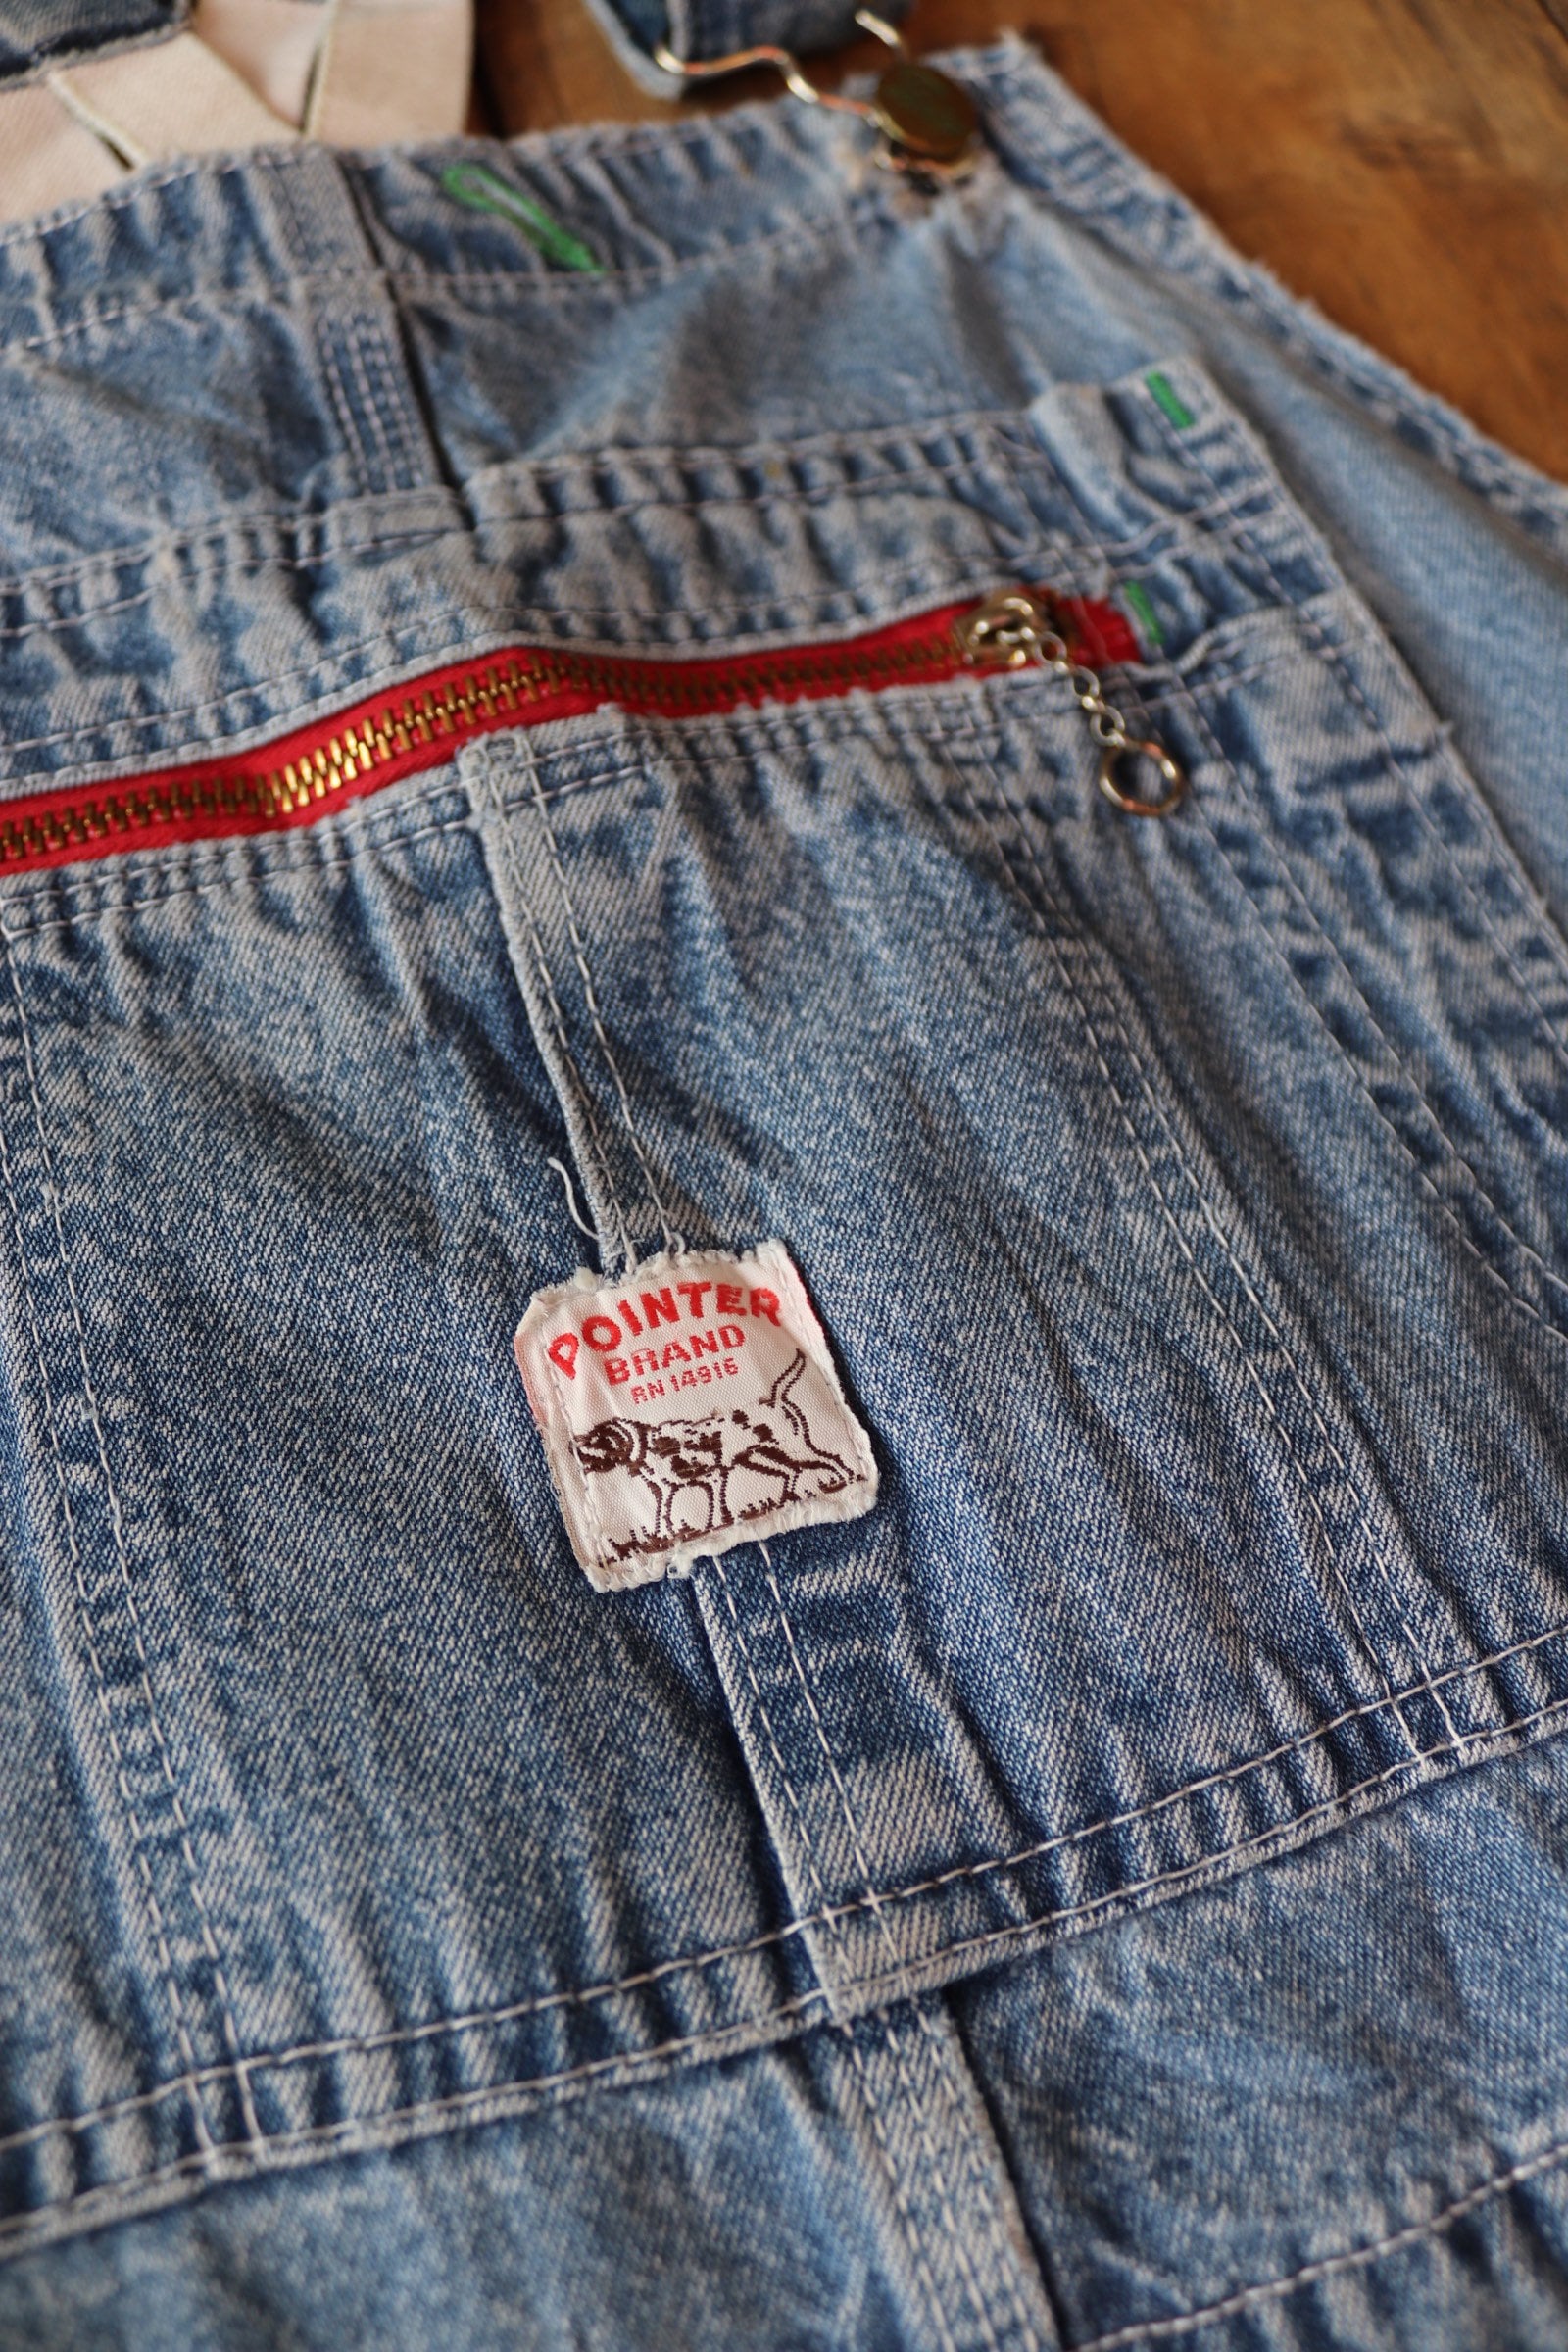 Vintage 1980s 80s Pointer denim overalls dungarees bib brace workwear low  back work chore 41” x 29” advertising straps